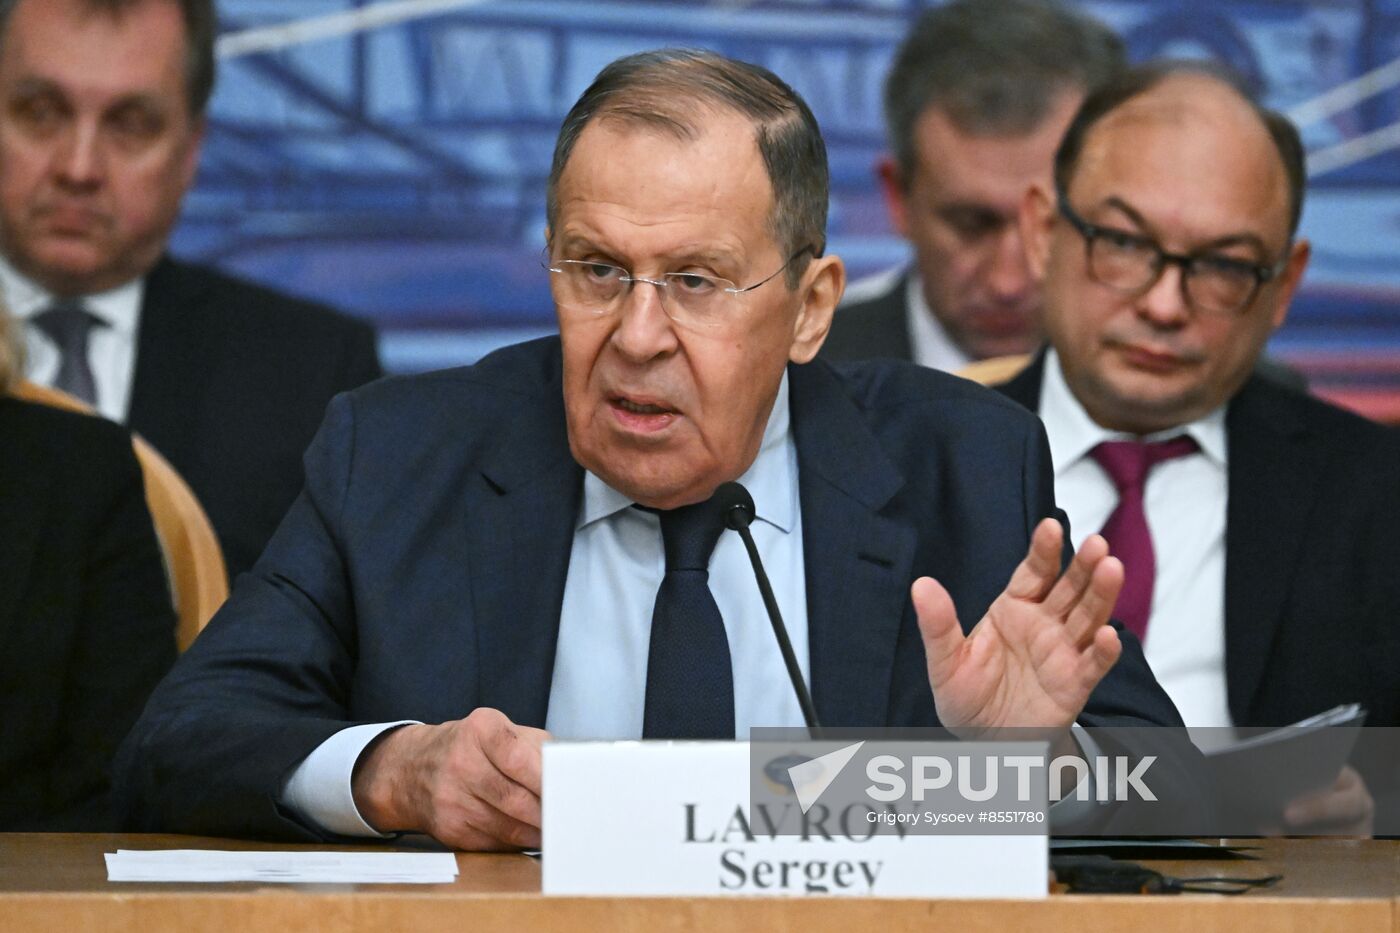 Russia Ukraine Conflict Ambassadorial Roundtable